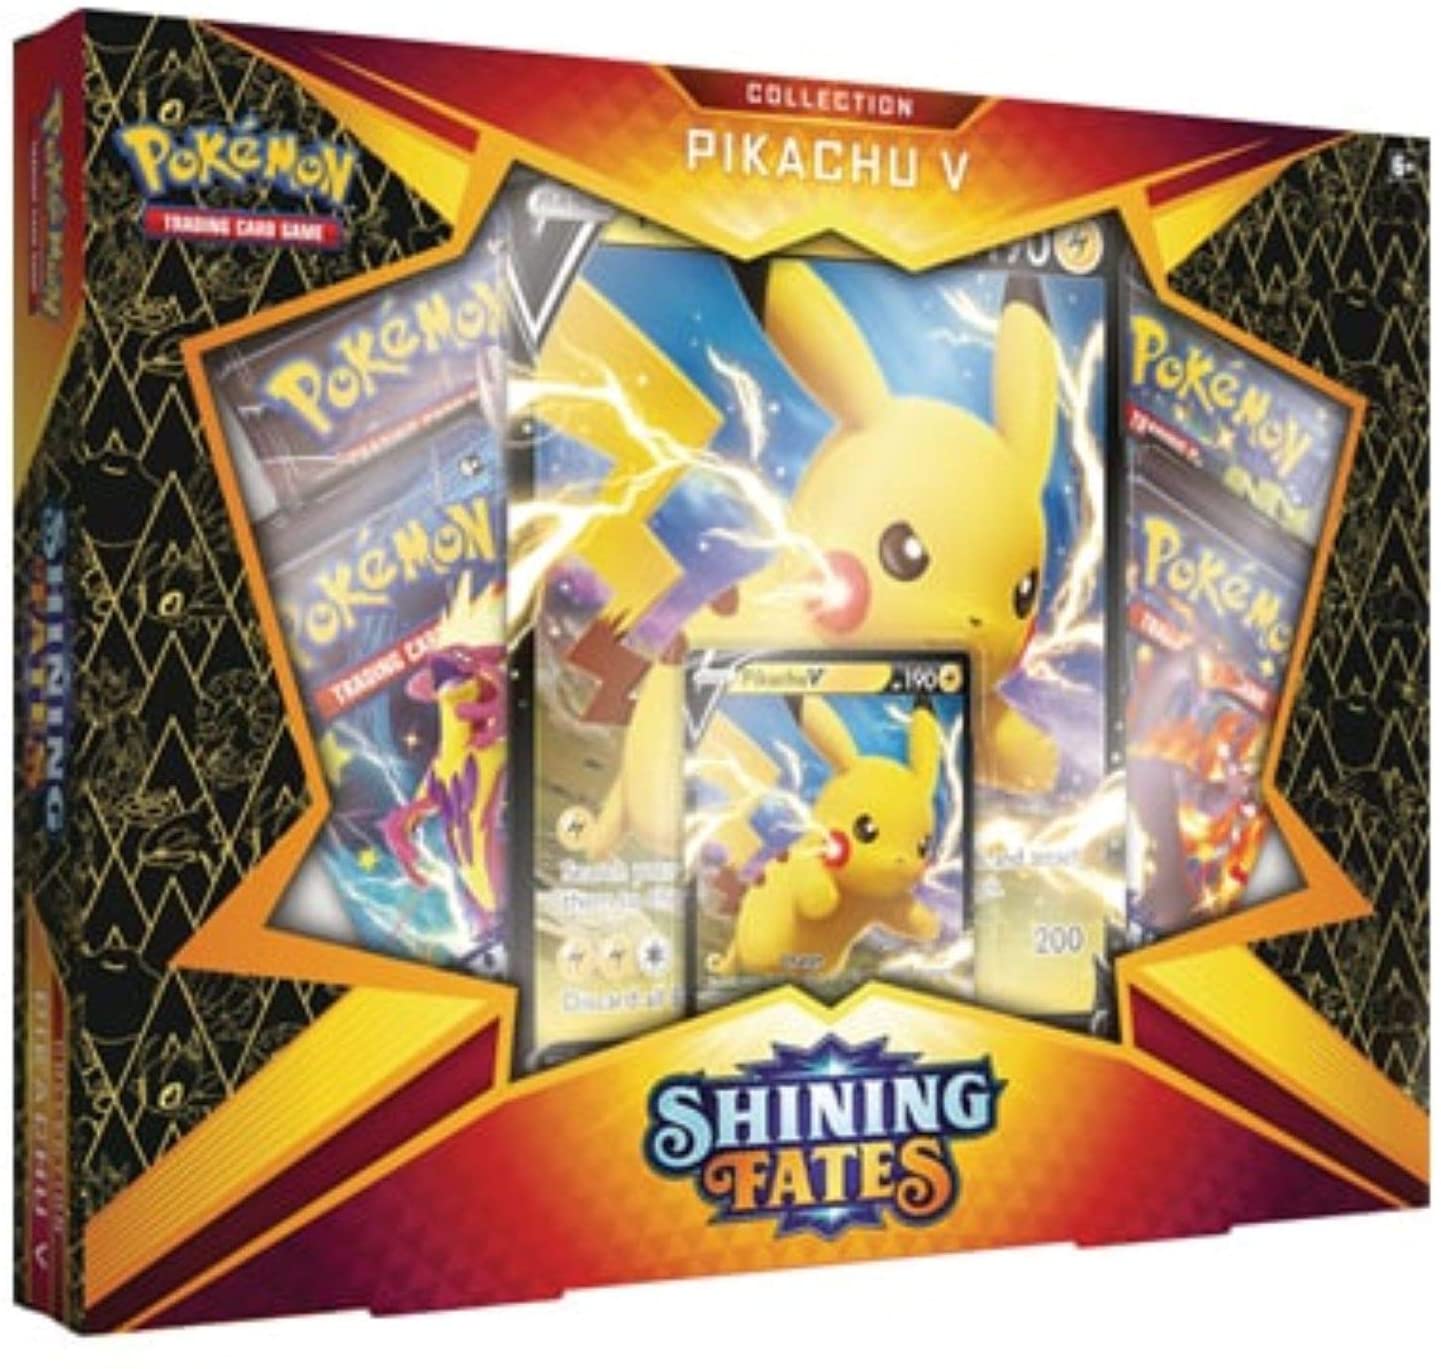 Pokémon - Shining Fates Collection Pikachu V Box